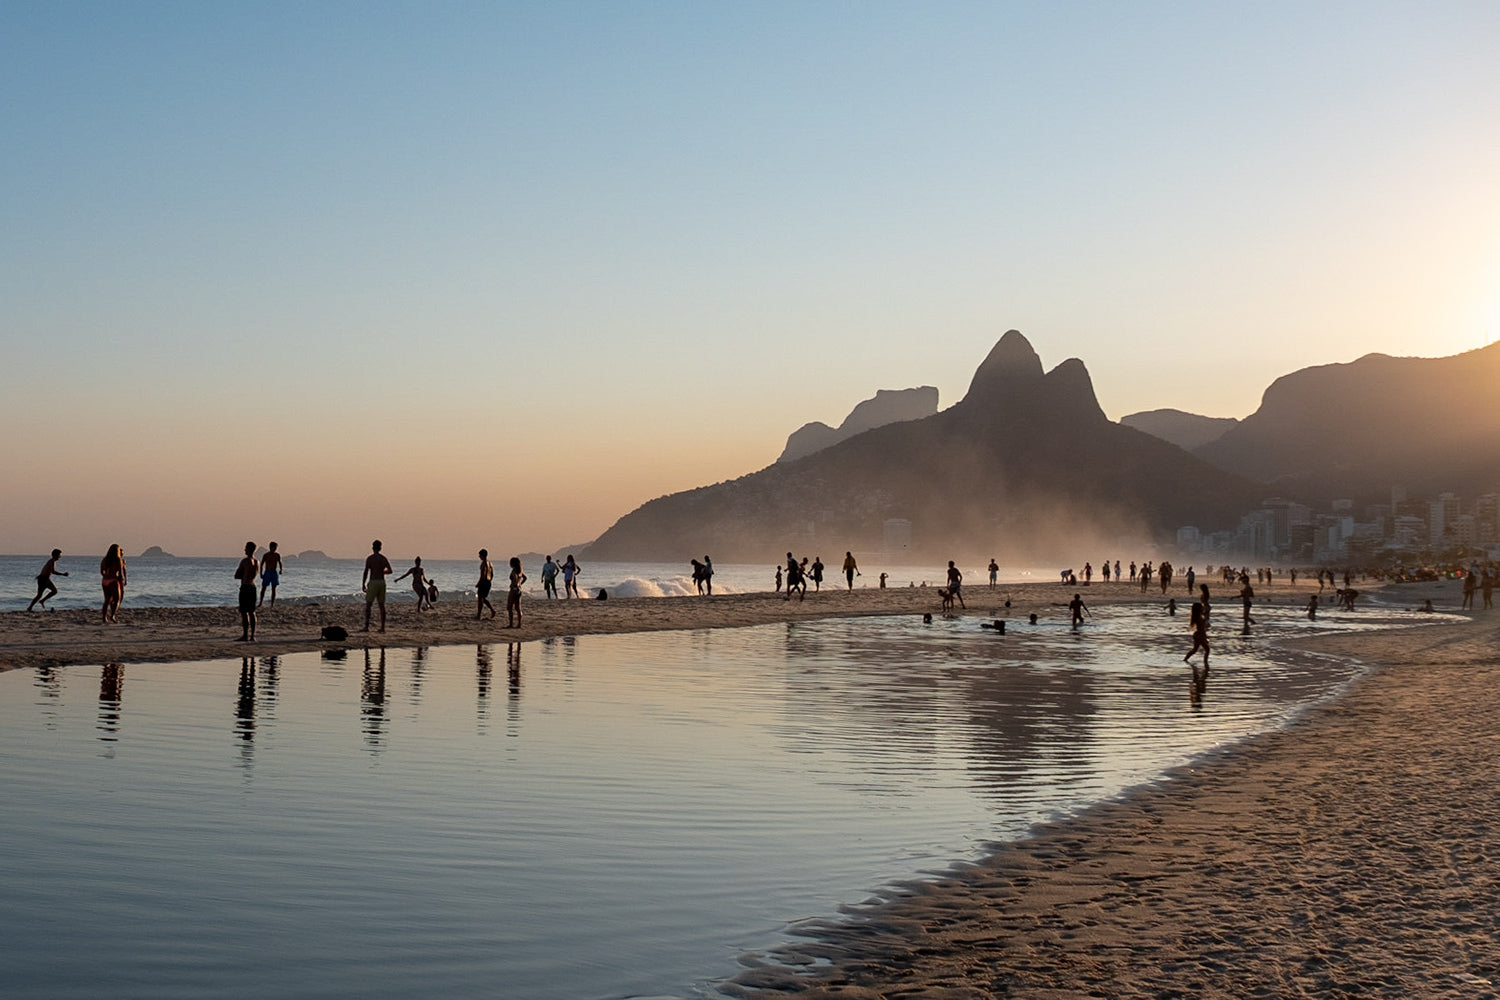 Silhouettes of beachgoers enjoying the sunset on Ipanema Beach, looking towards Twin brothers mountain in Rio de Janeiro, Brazil.